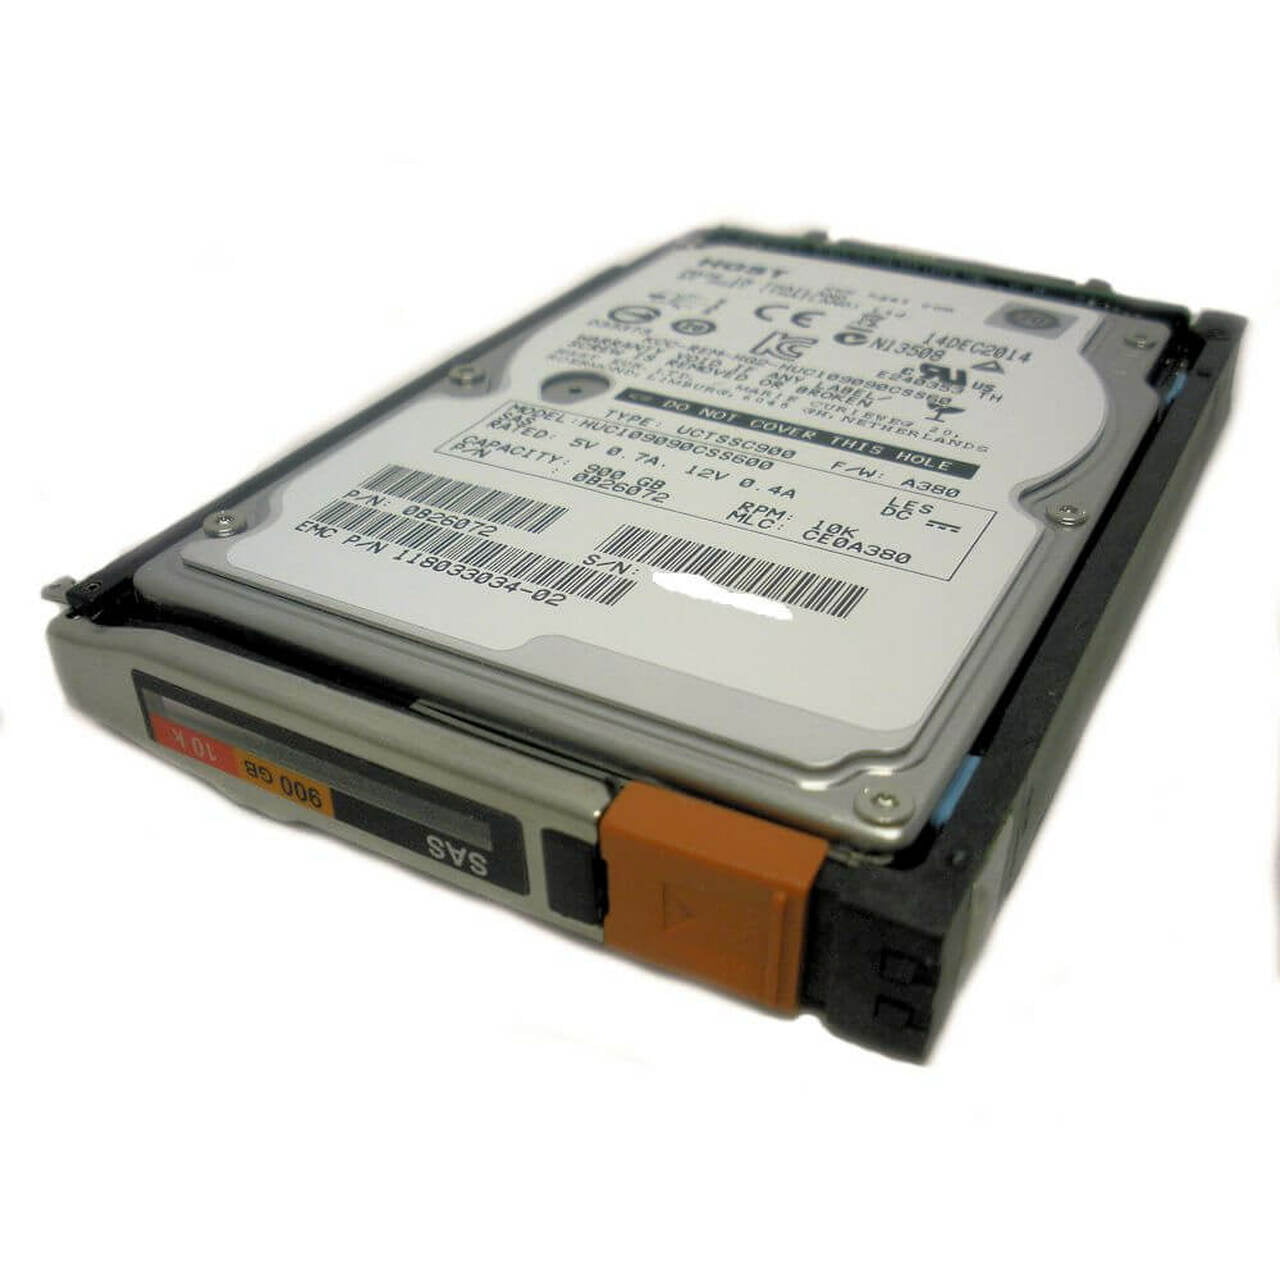 Compaq Proliant 18.2GB HardDrives In Hot Swap Caddy Lot of 6 